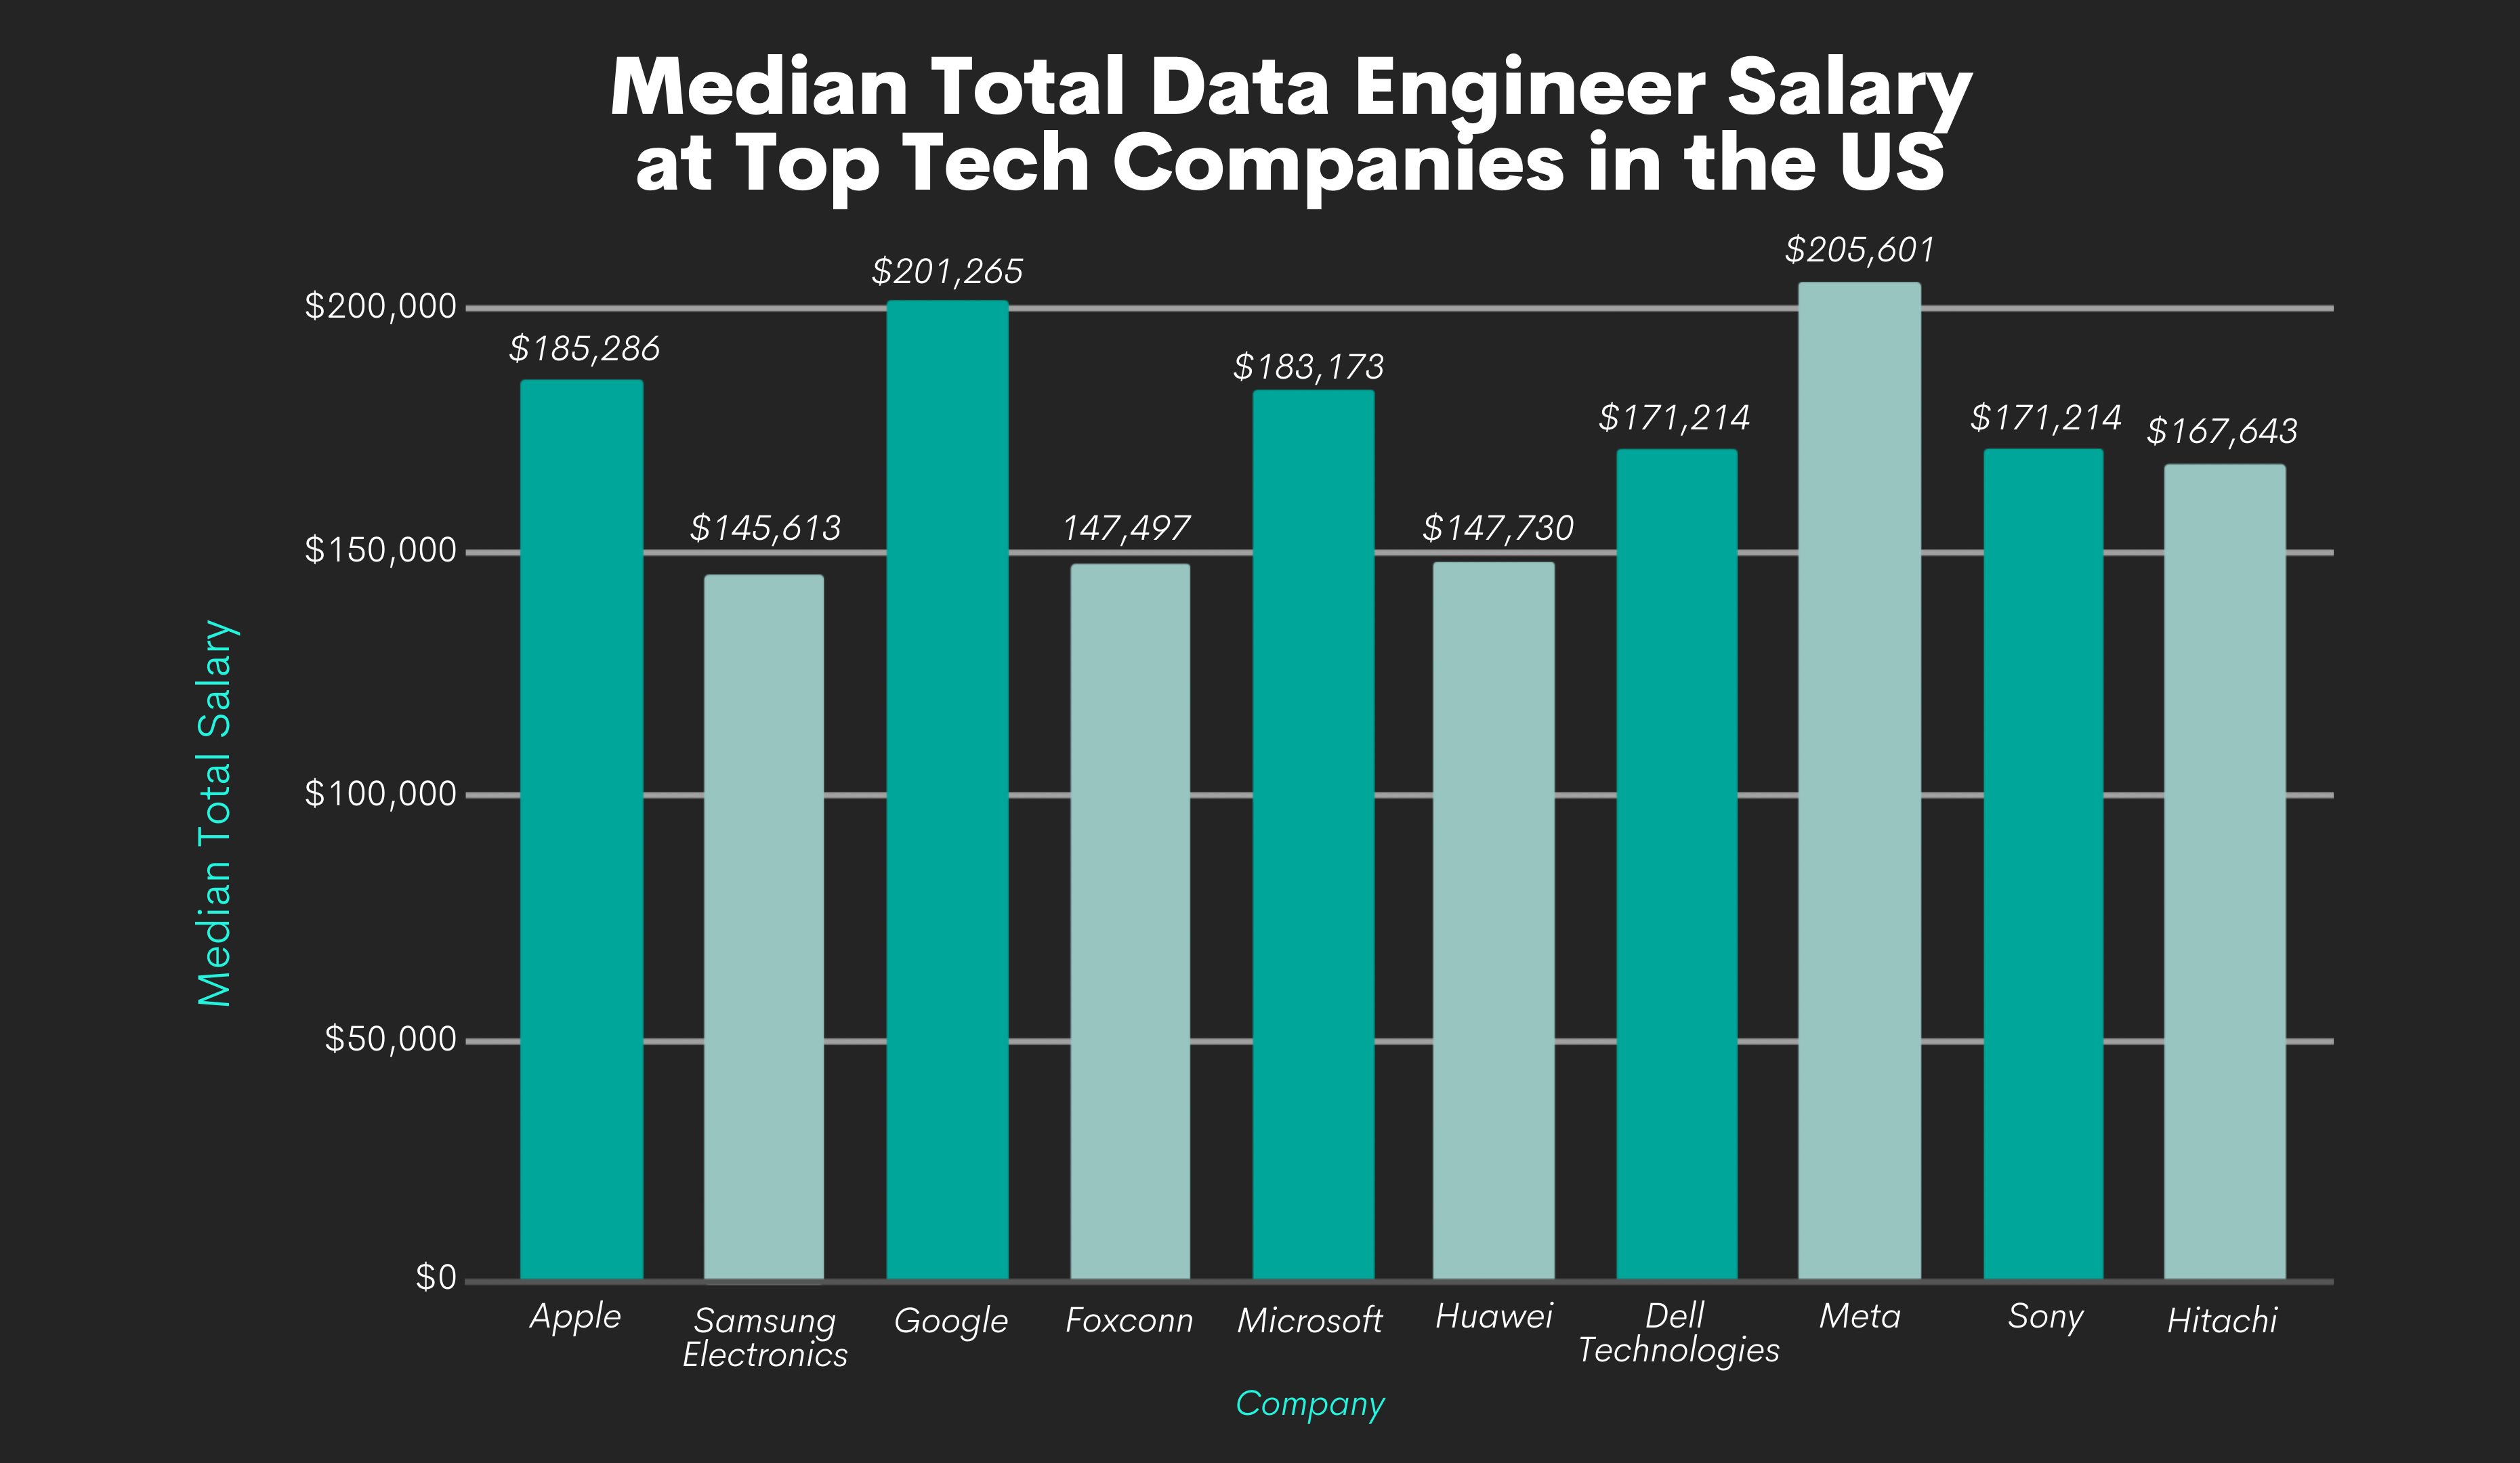 Data Engineer Salaries at the Top Tech Companies